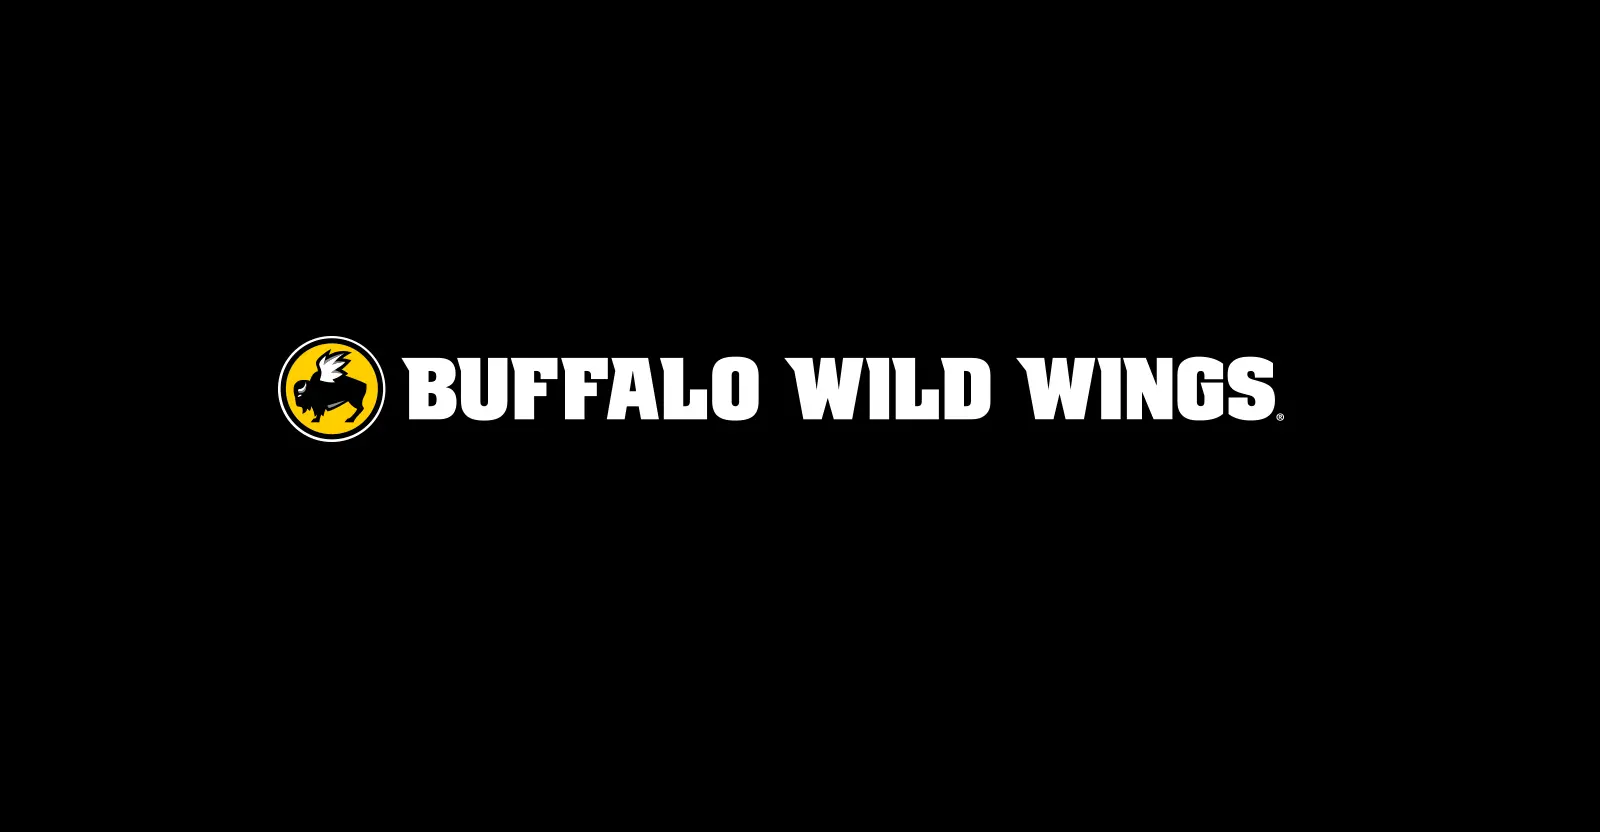 buffalo wild wings gluten-free menu